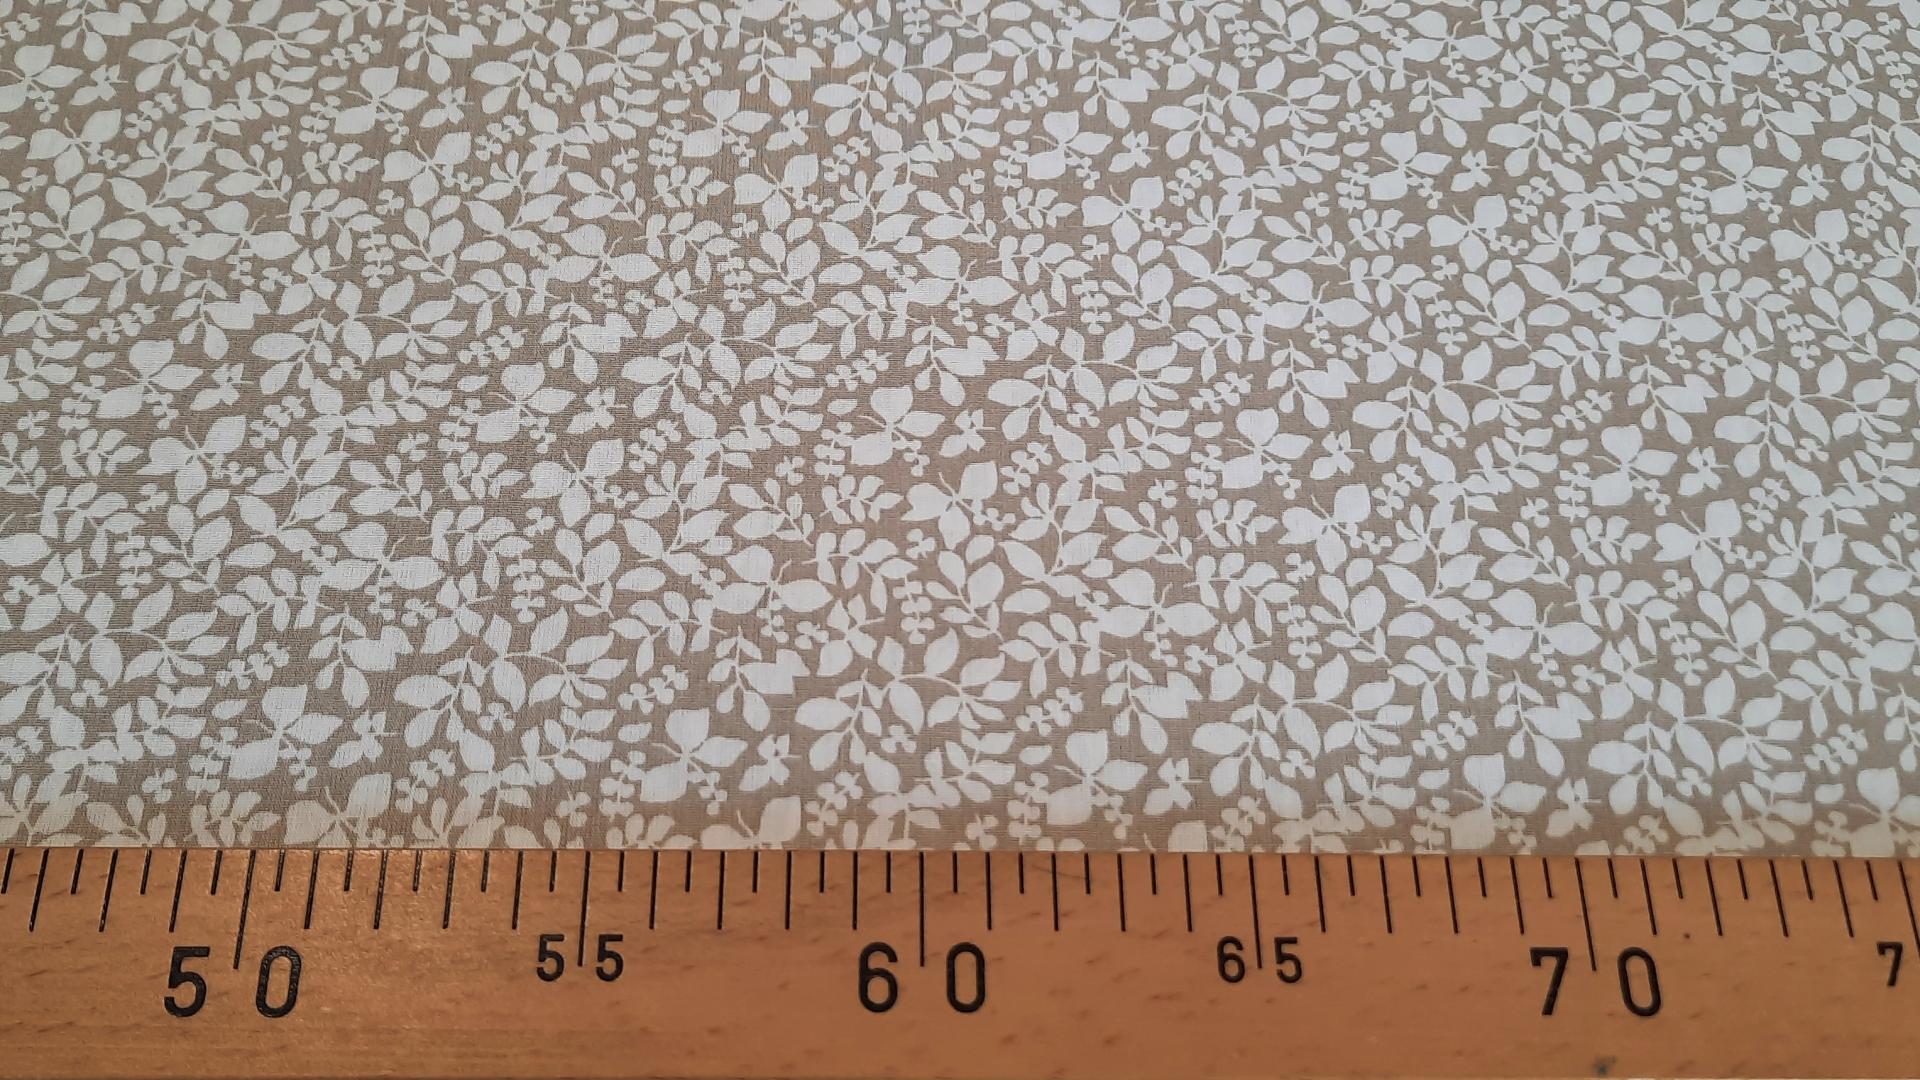 Coton leaves 2